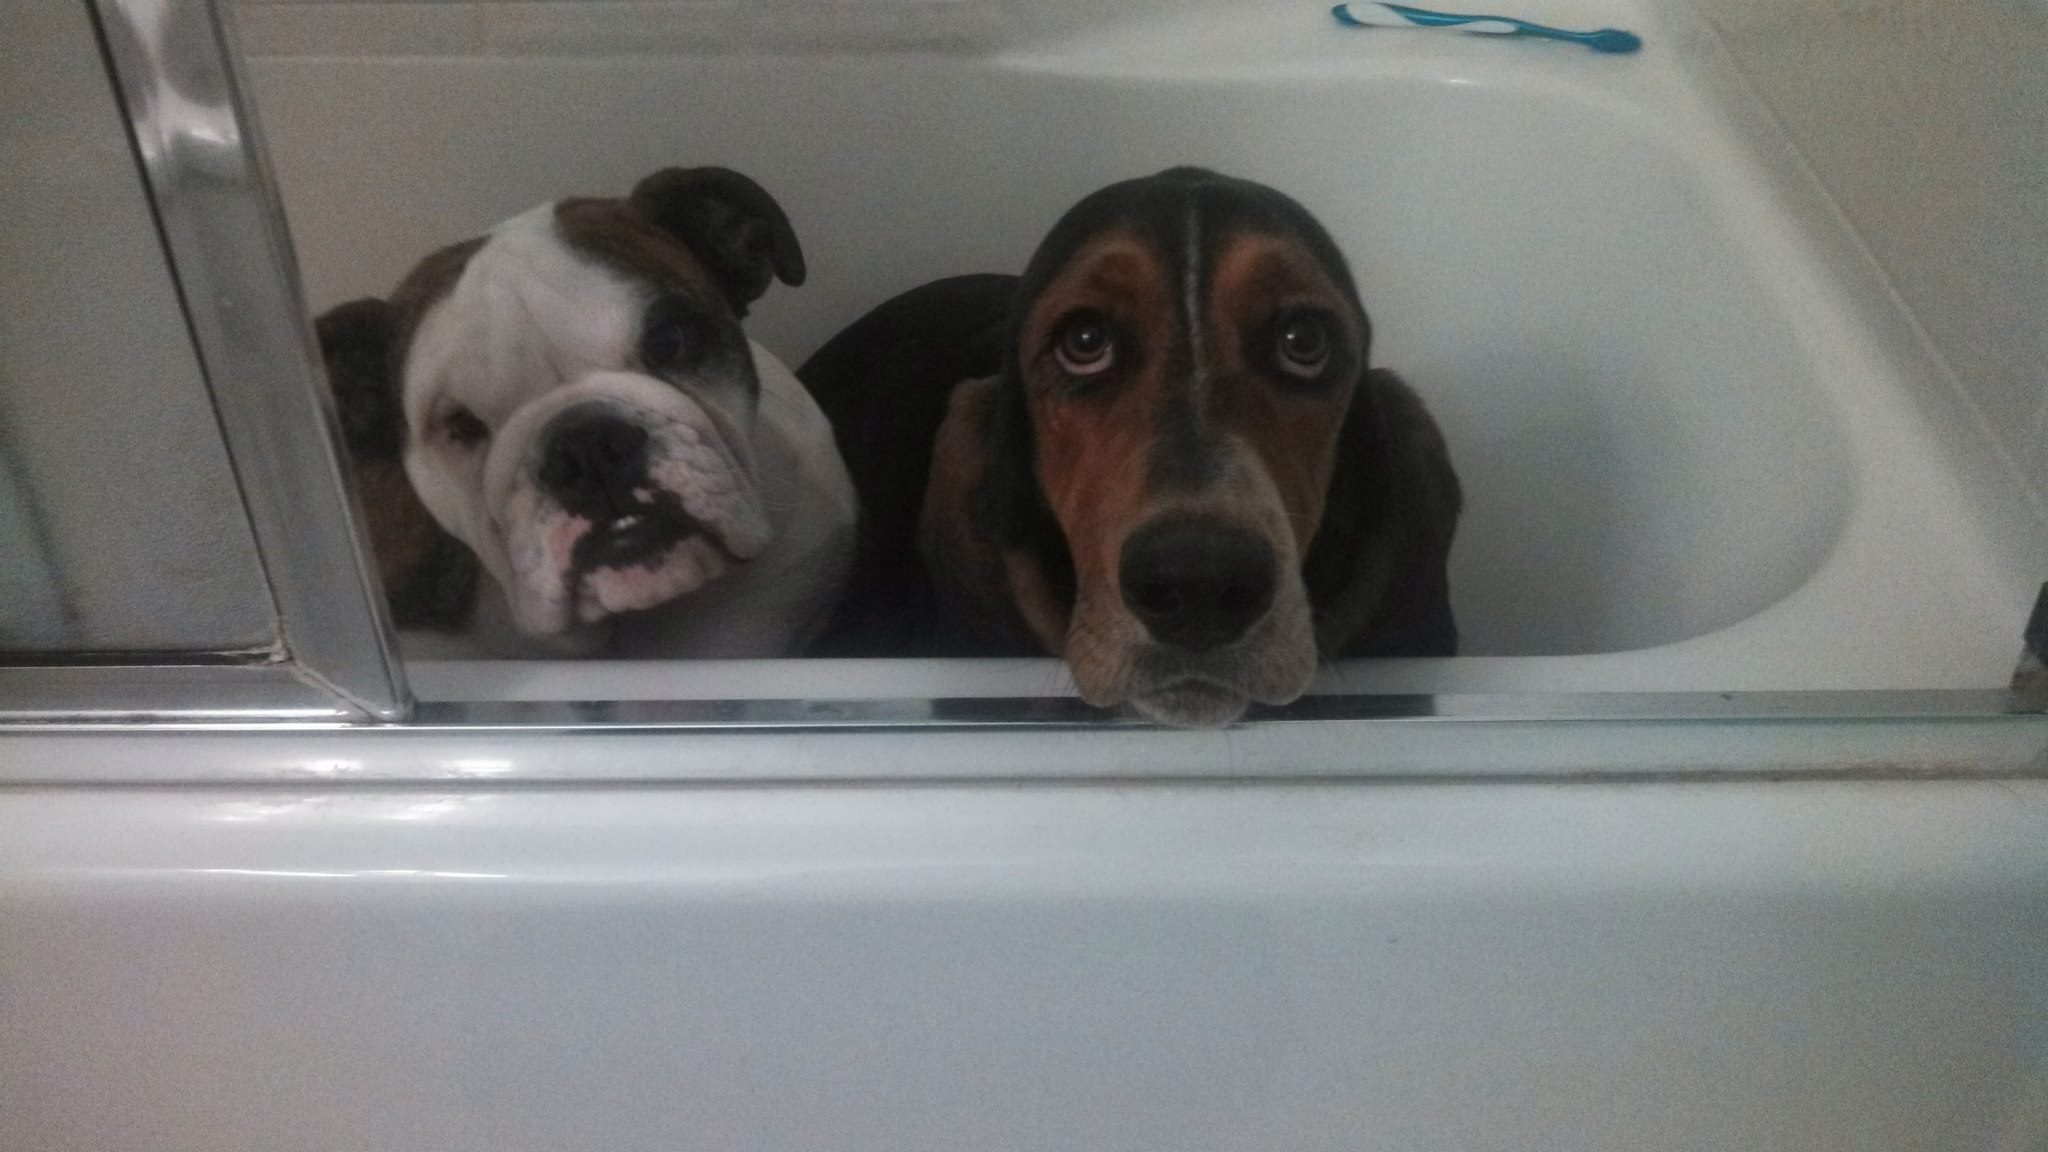 A Basset Hound and bulldog inside the bathtub